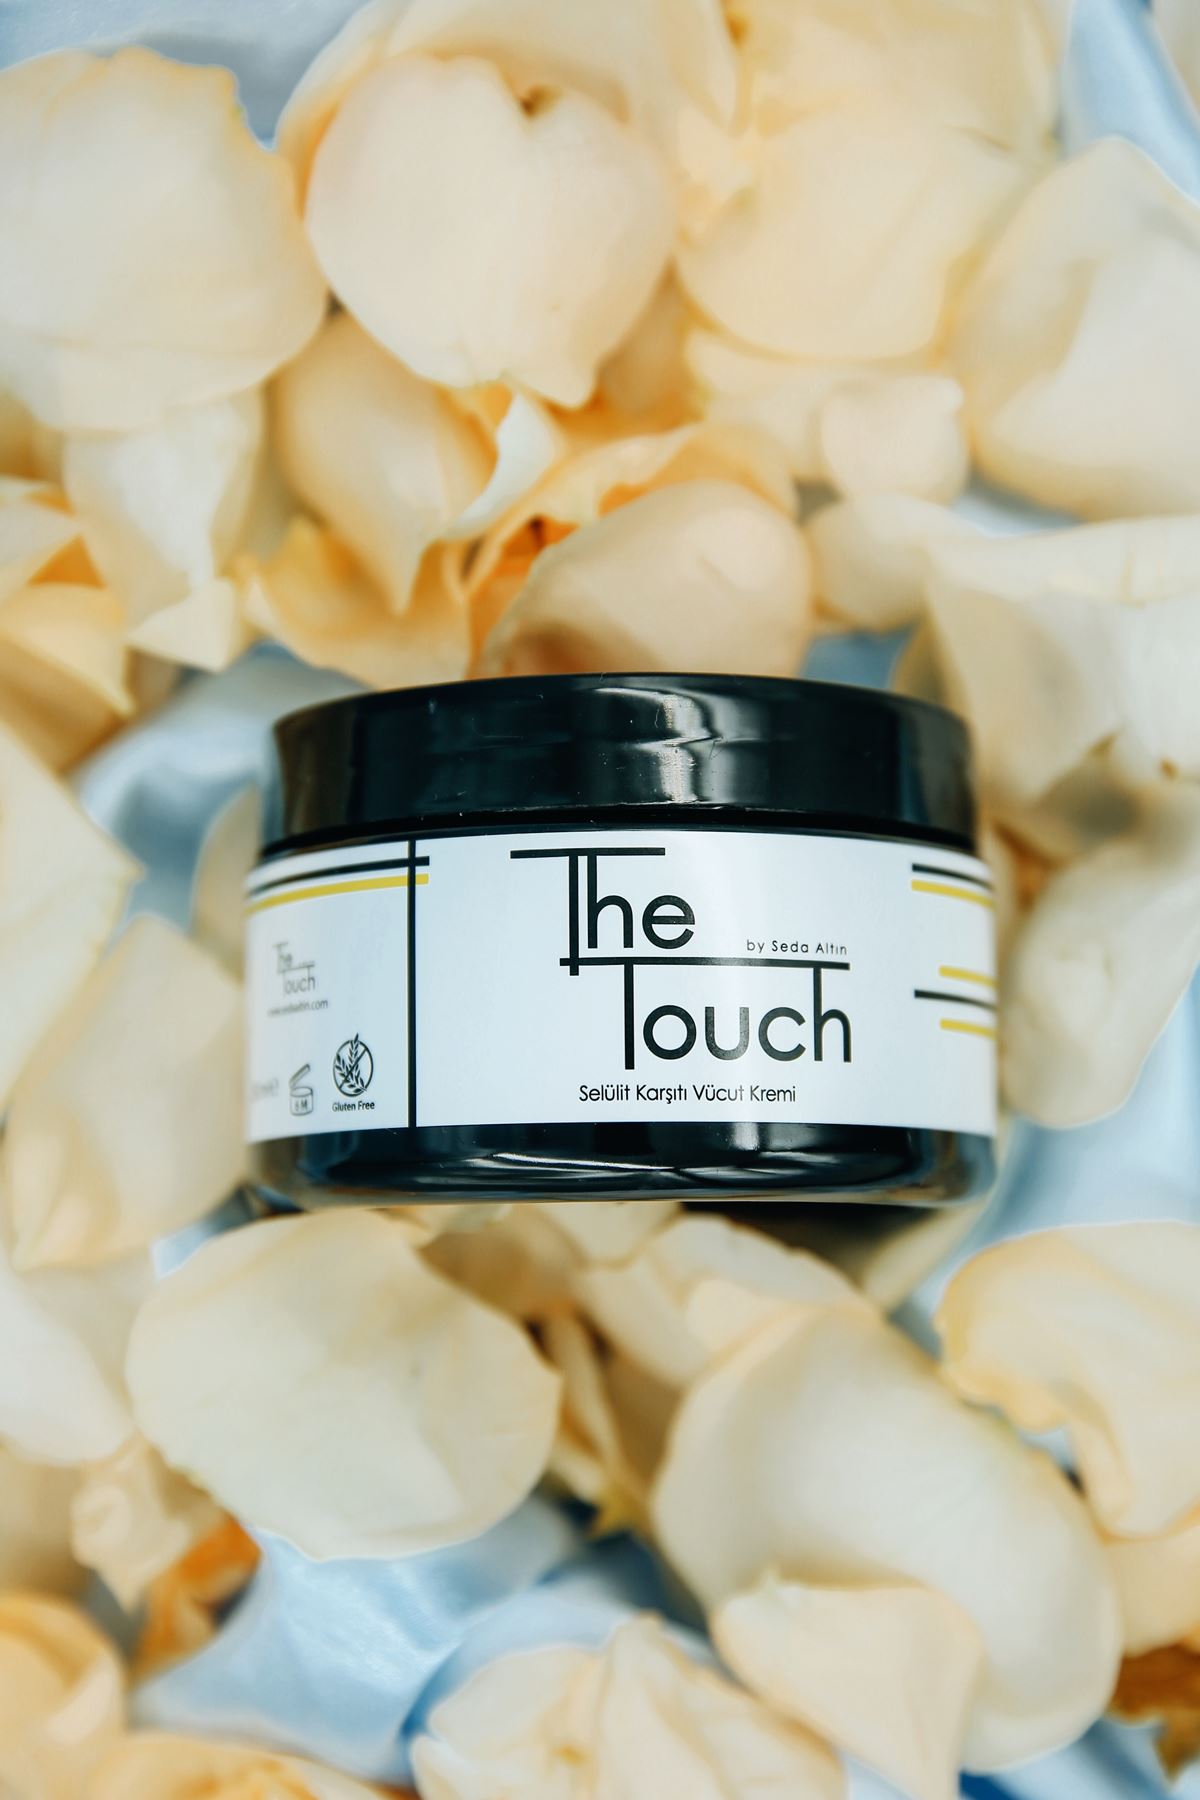 The Touch Anti Cellulite Cream